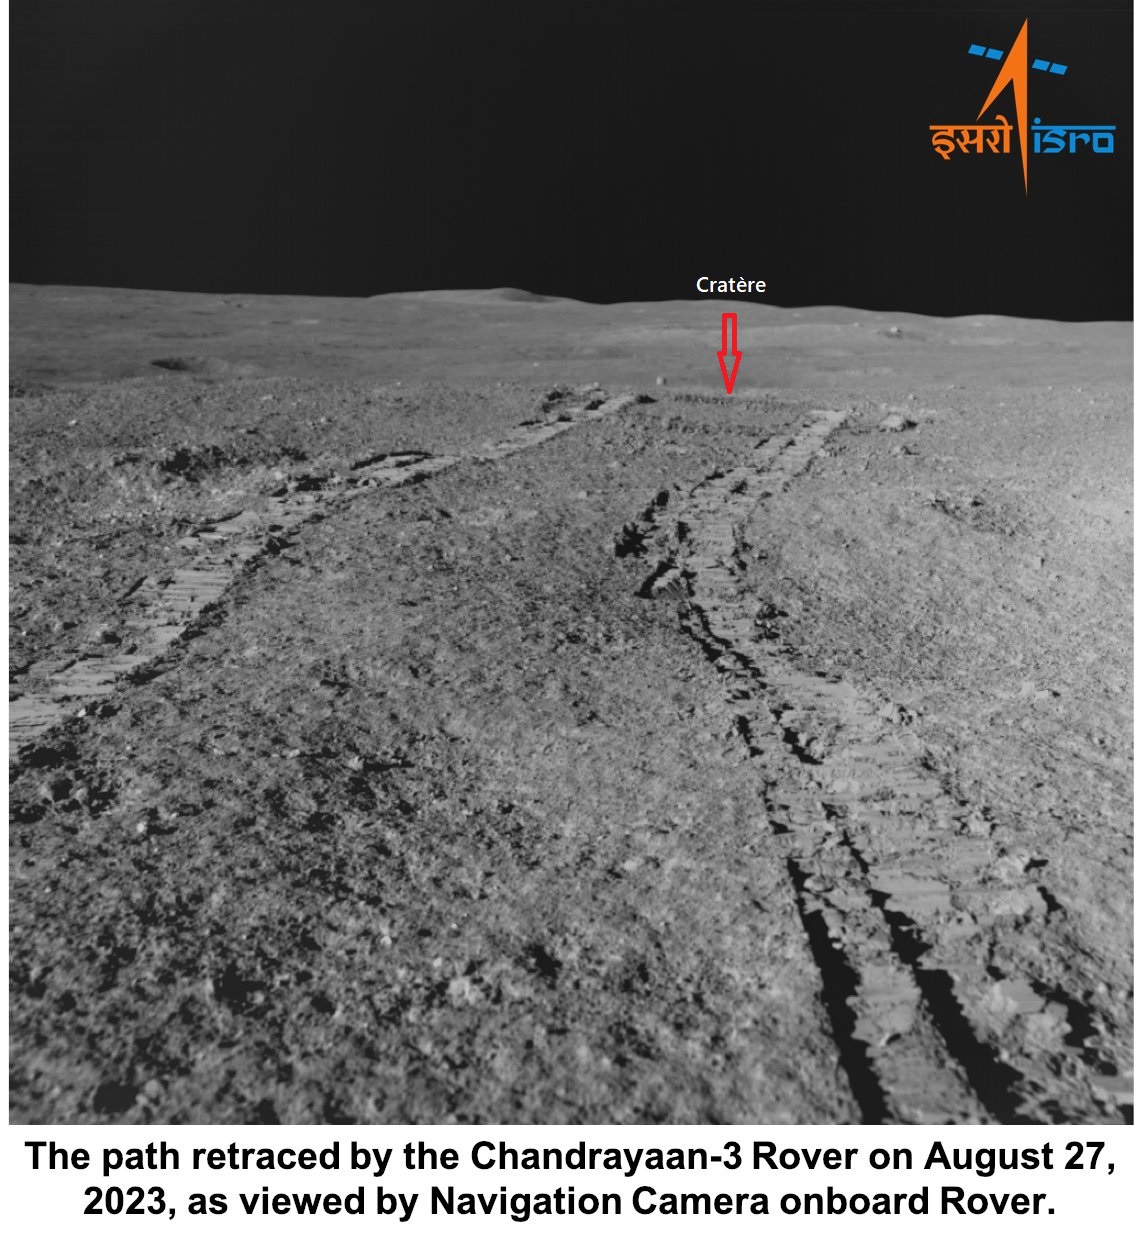 [Chandrayaan 3] Mission sur la Lune (atterrisseur Vikram - rover Pragyan) - Page 7 12352